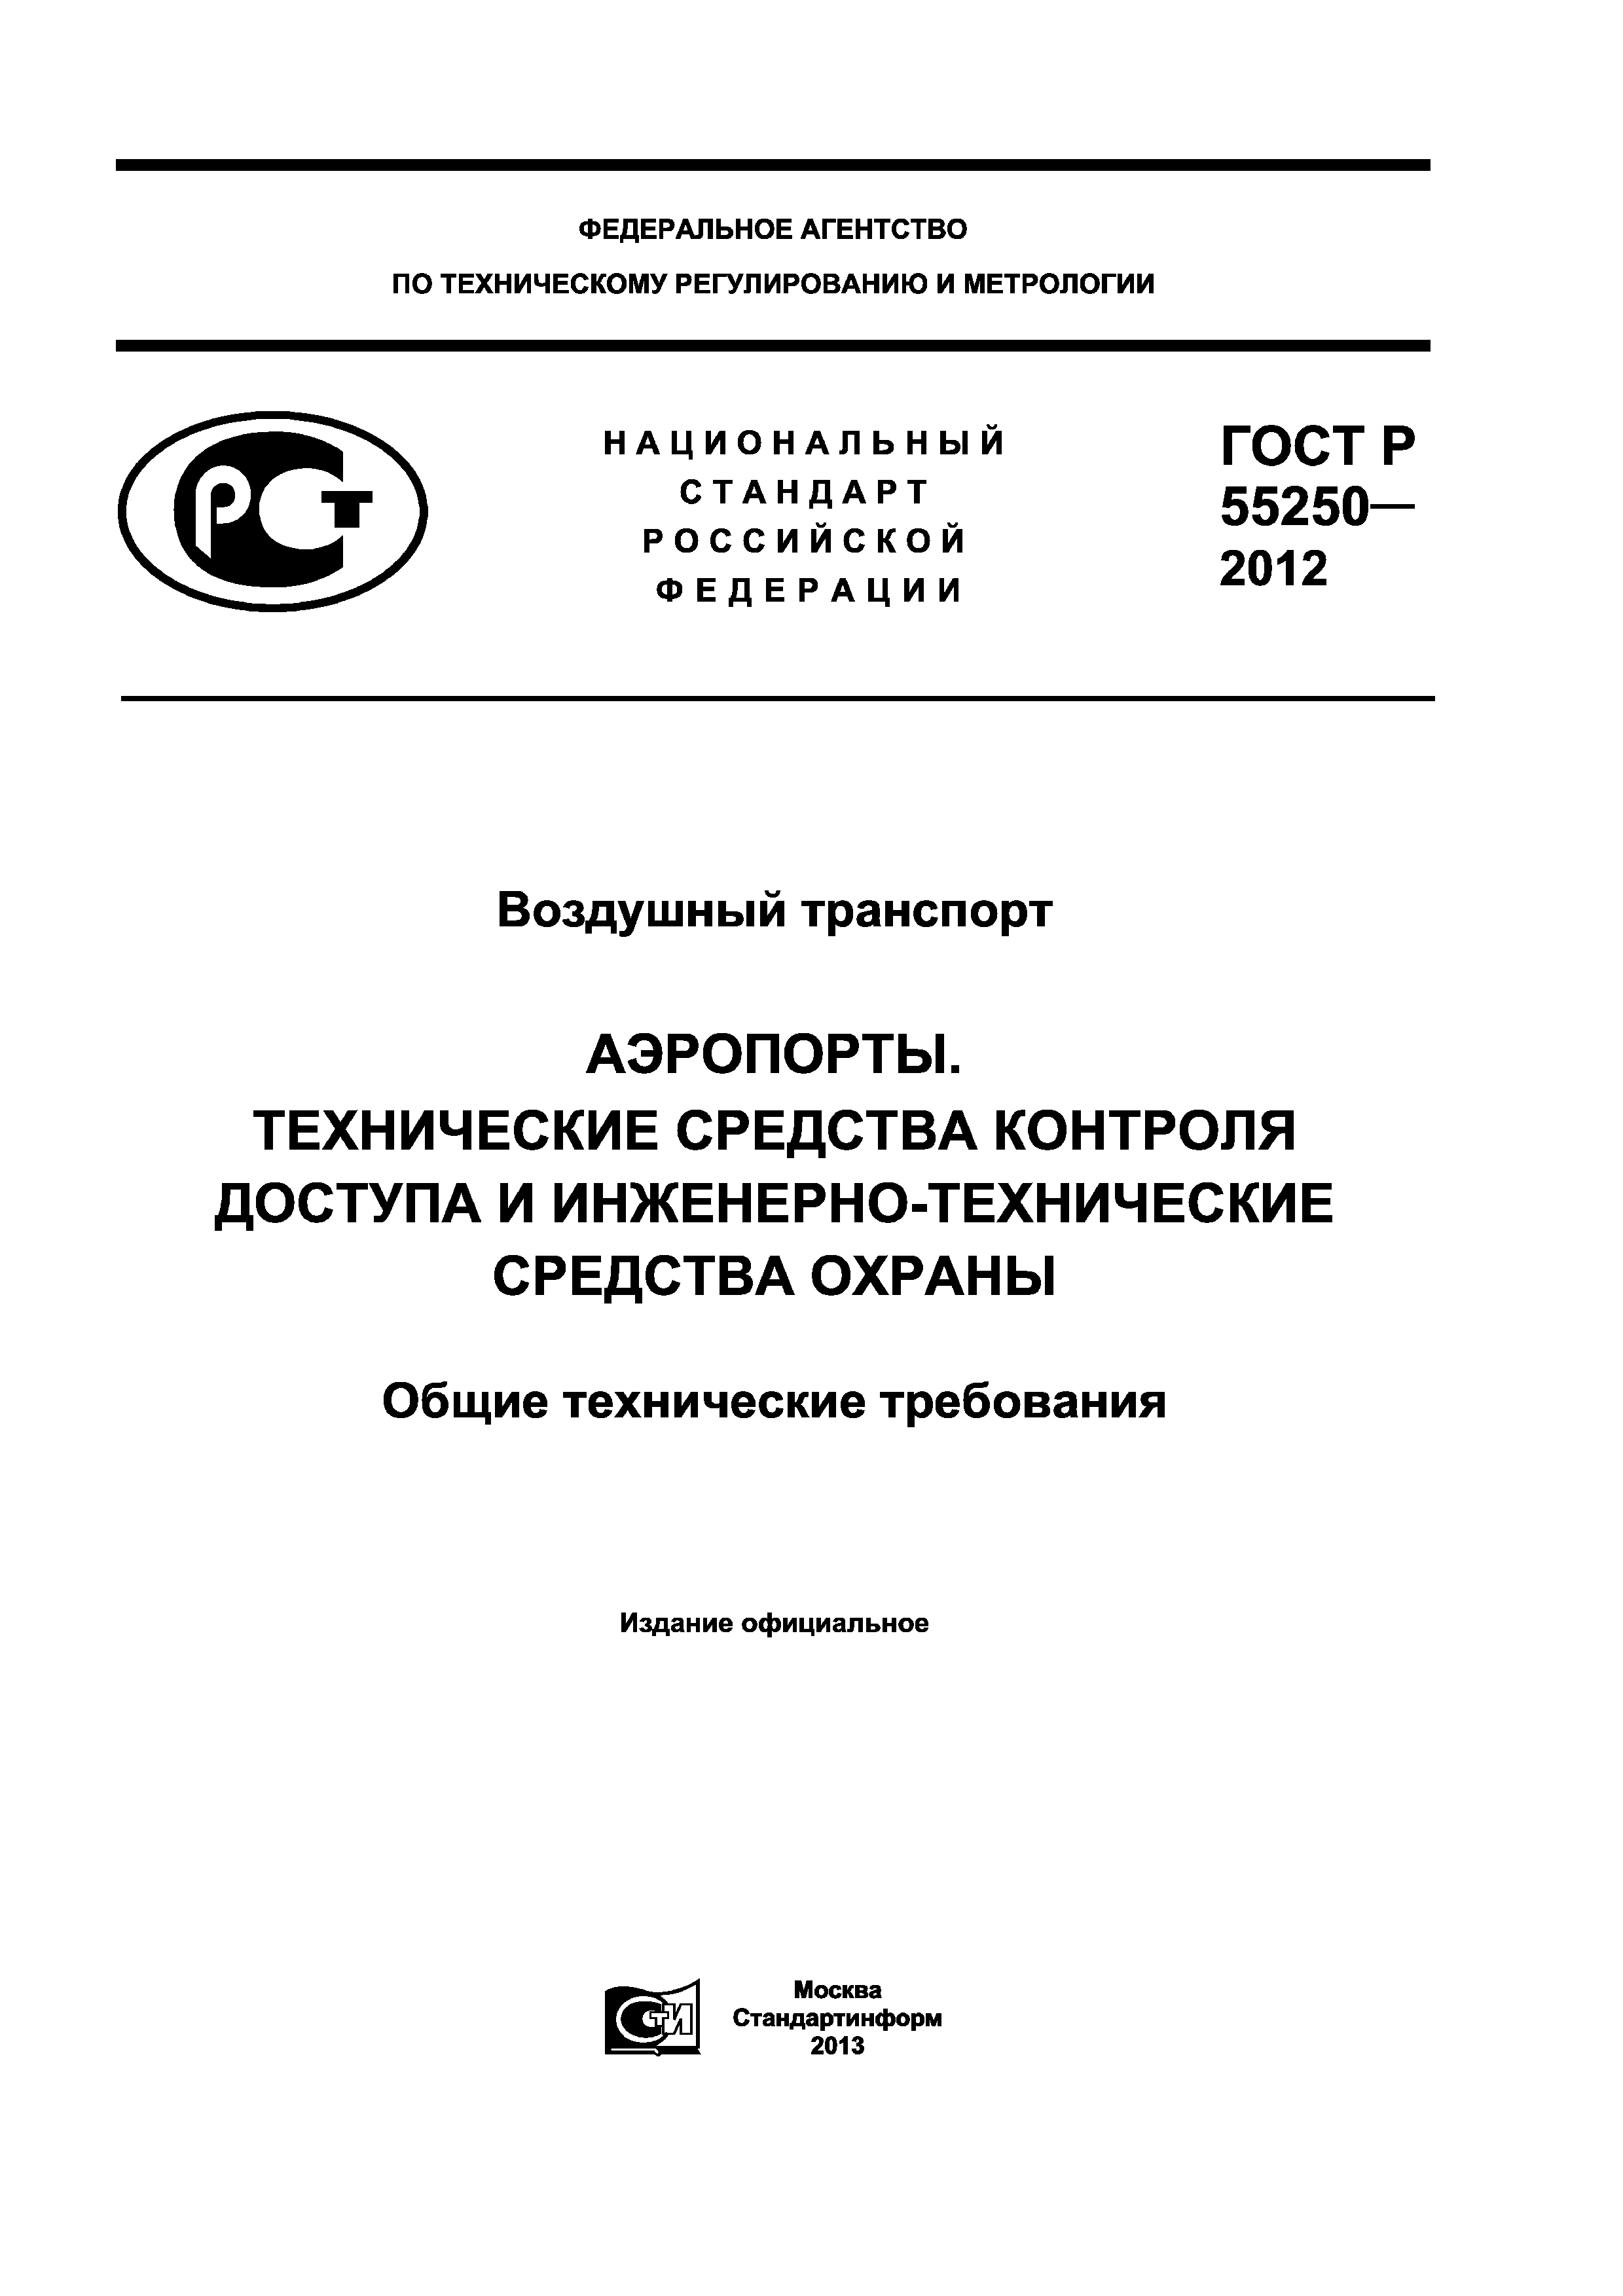 ГОСТ Р 55250-2012